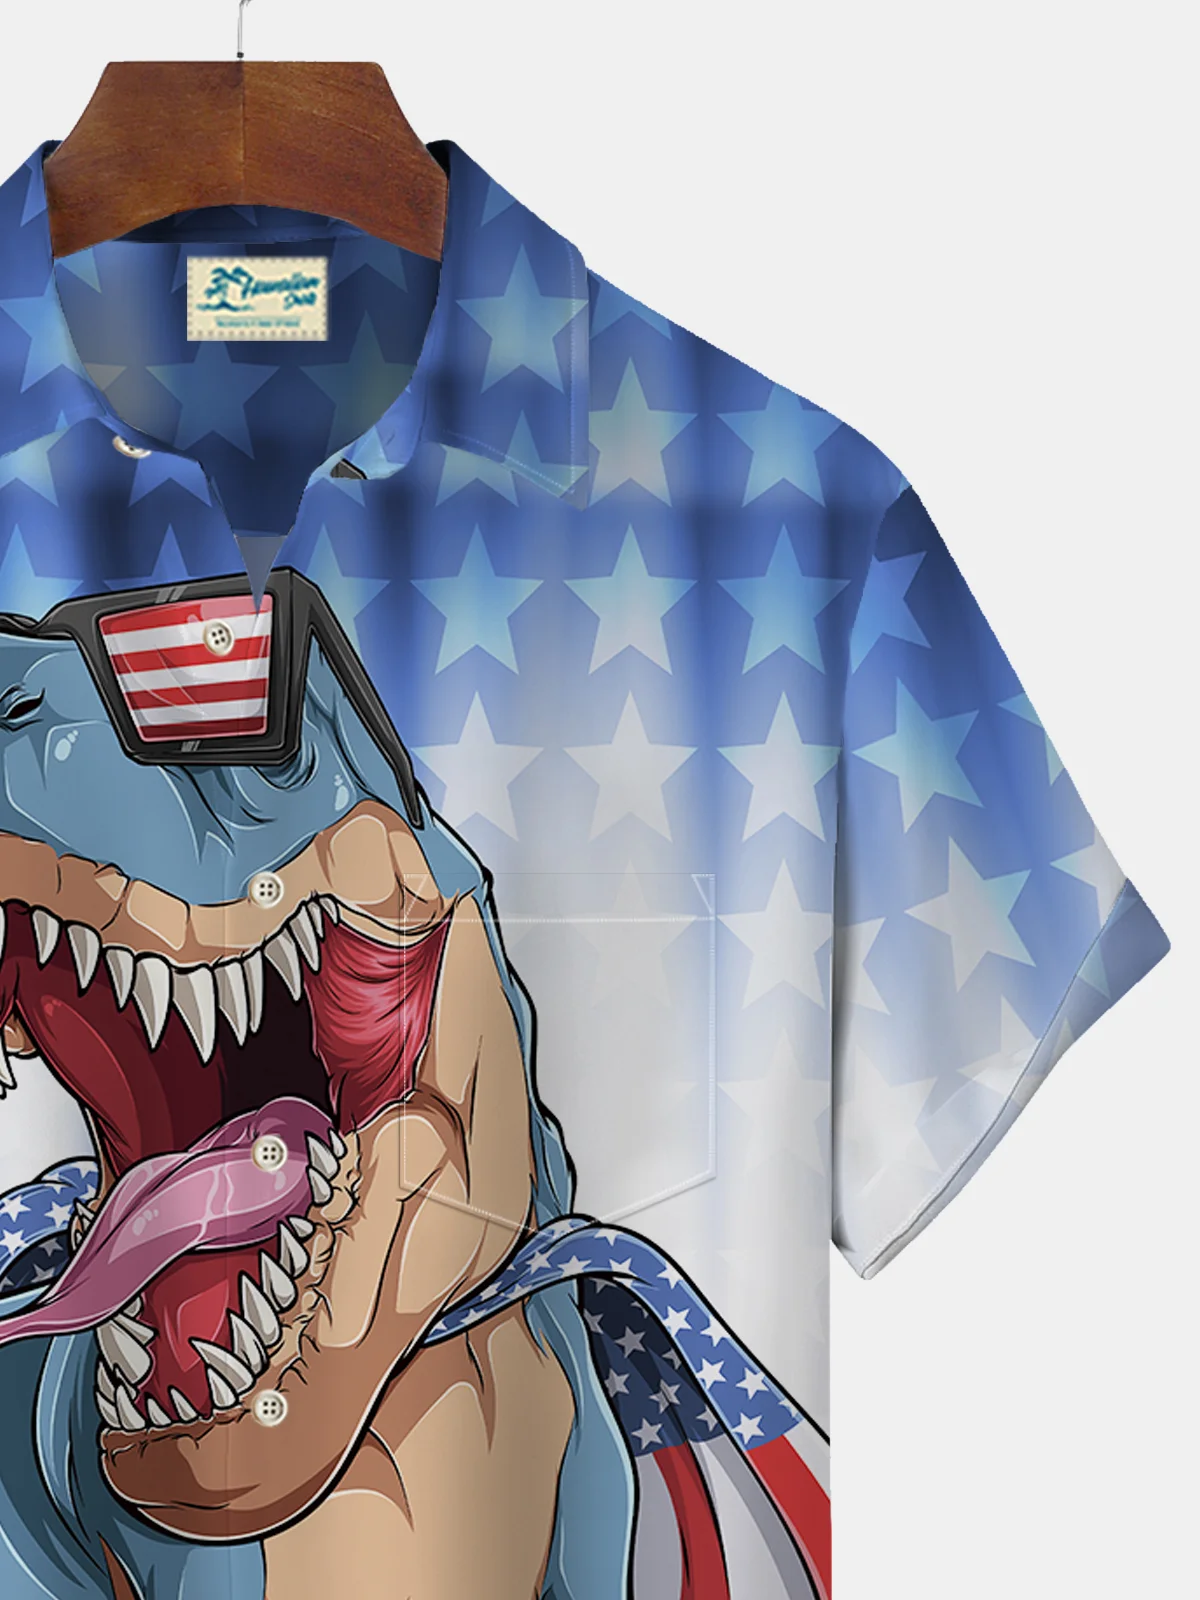 Royaura American Flag Independence Day 4th July Dinosaur Print Men's Hawaiian Oversized Shirt with Pockets